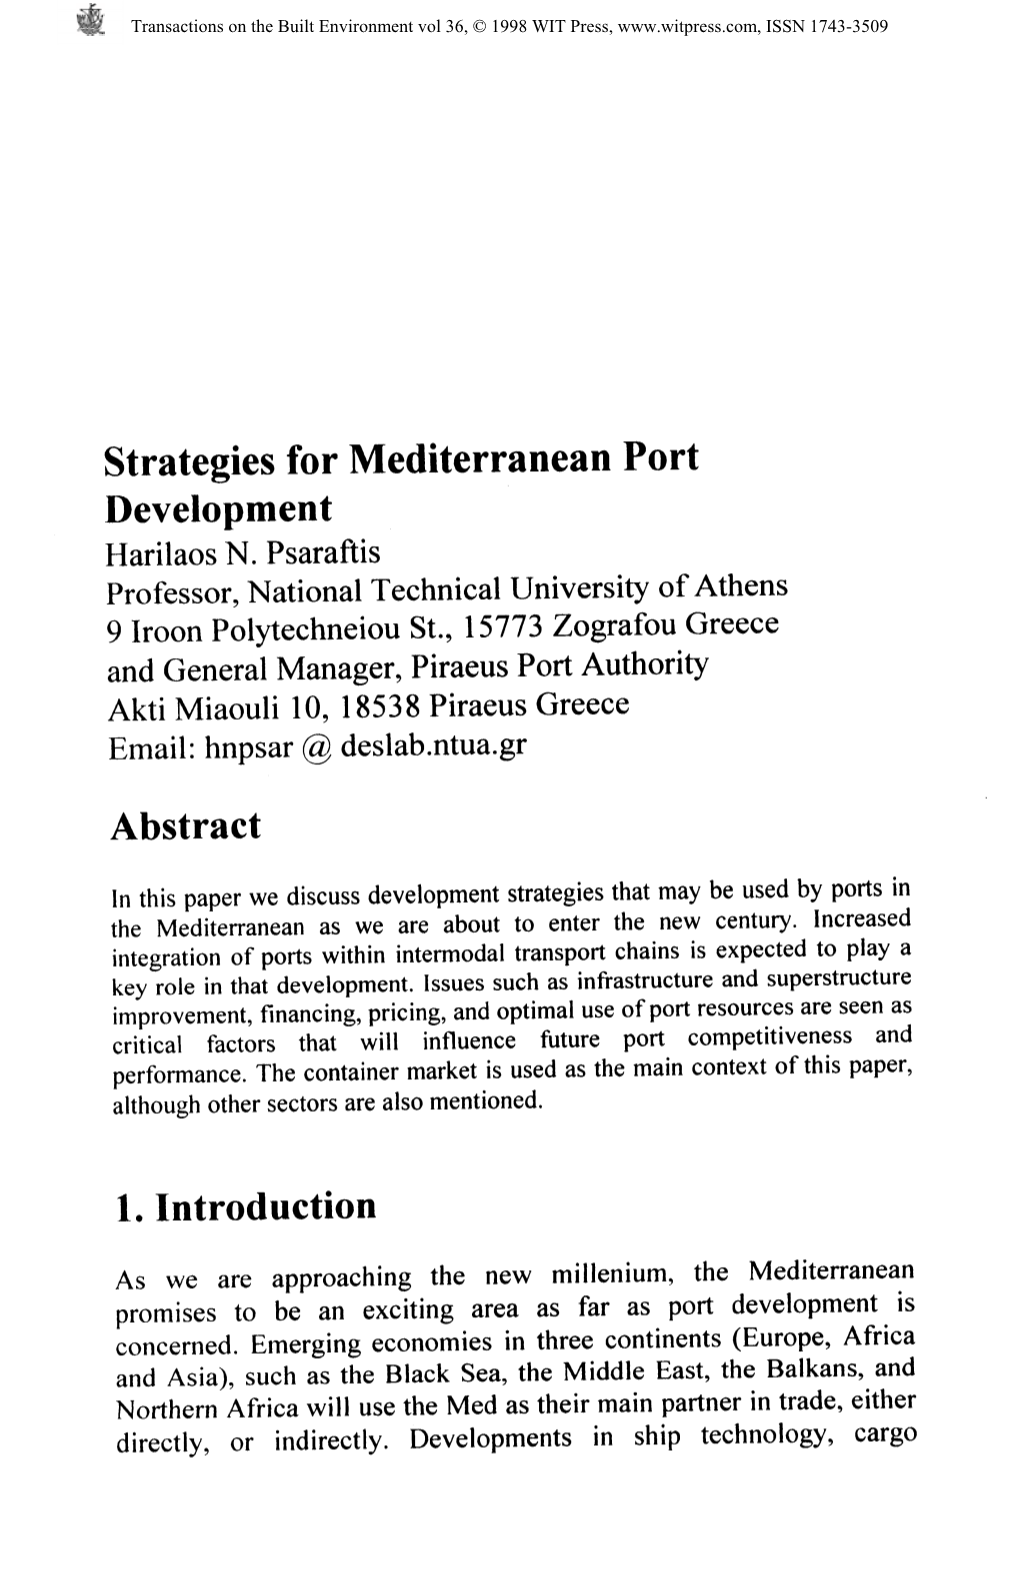 Strategies for Mediterranean Port Development Harilaos N. Psaraftis